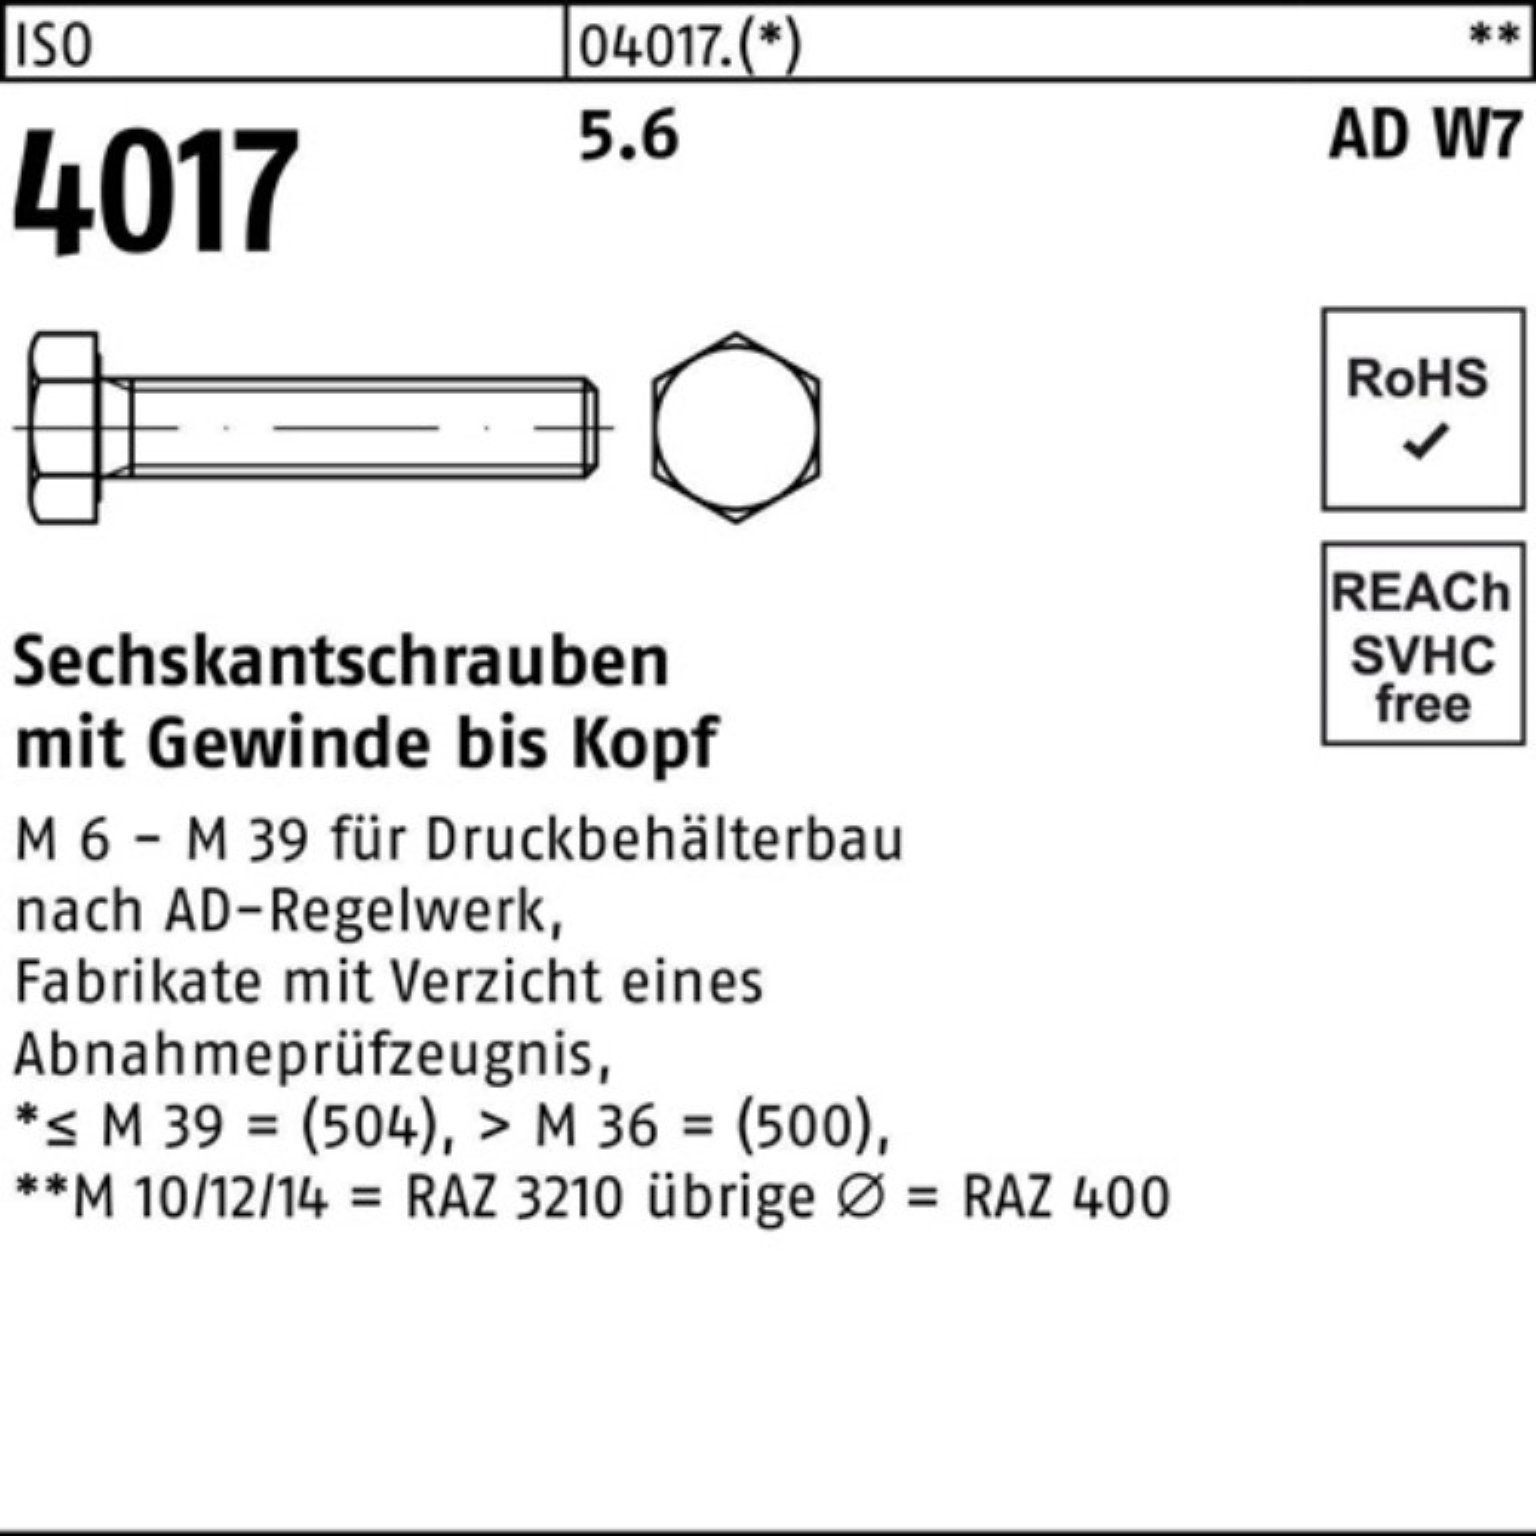 M16x Pack 4017 W7 VG 50 5.6 100er Sechskantschraube ISO I Sechskantschraube 35 AD Bufab Stück